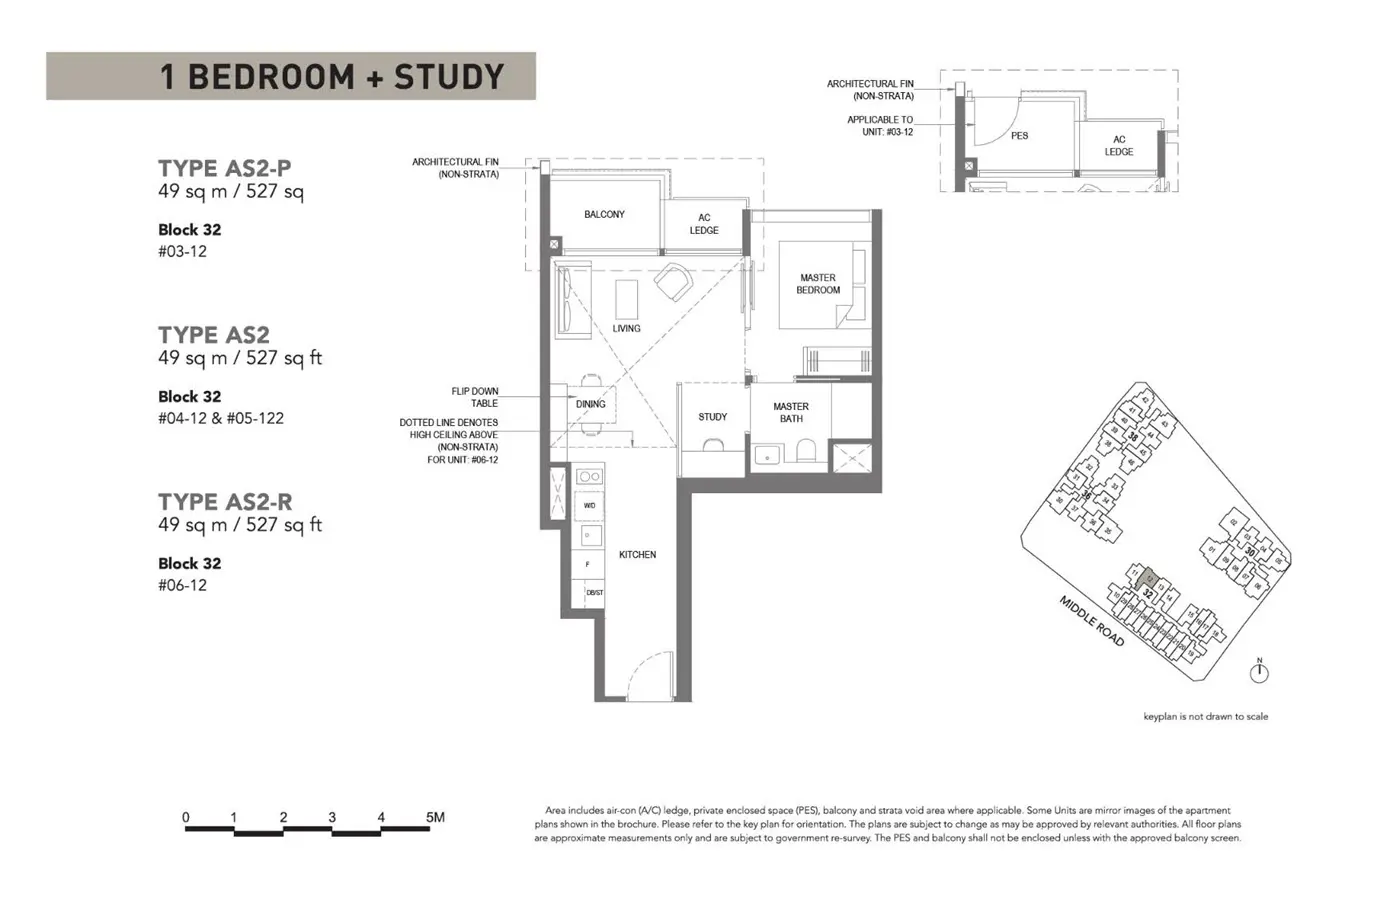 The M - Floor Plan - 1 Bedroom + Study AS2-P, AS2, AS2-R